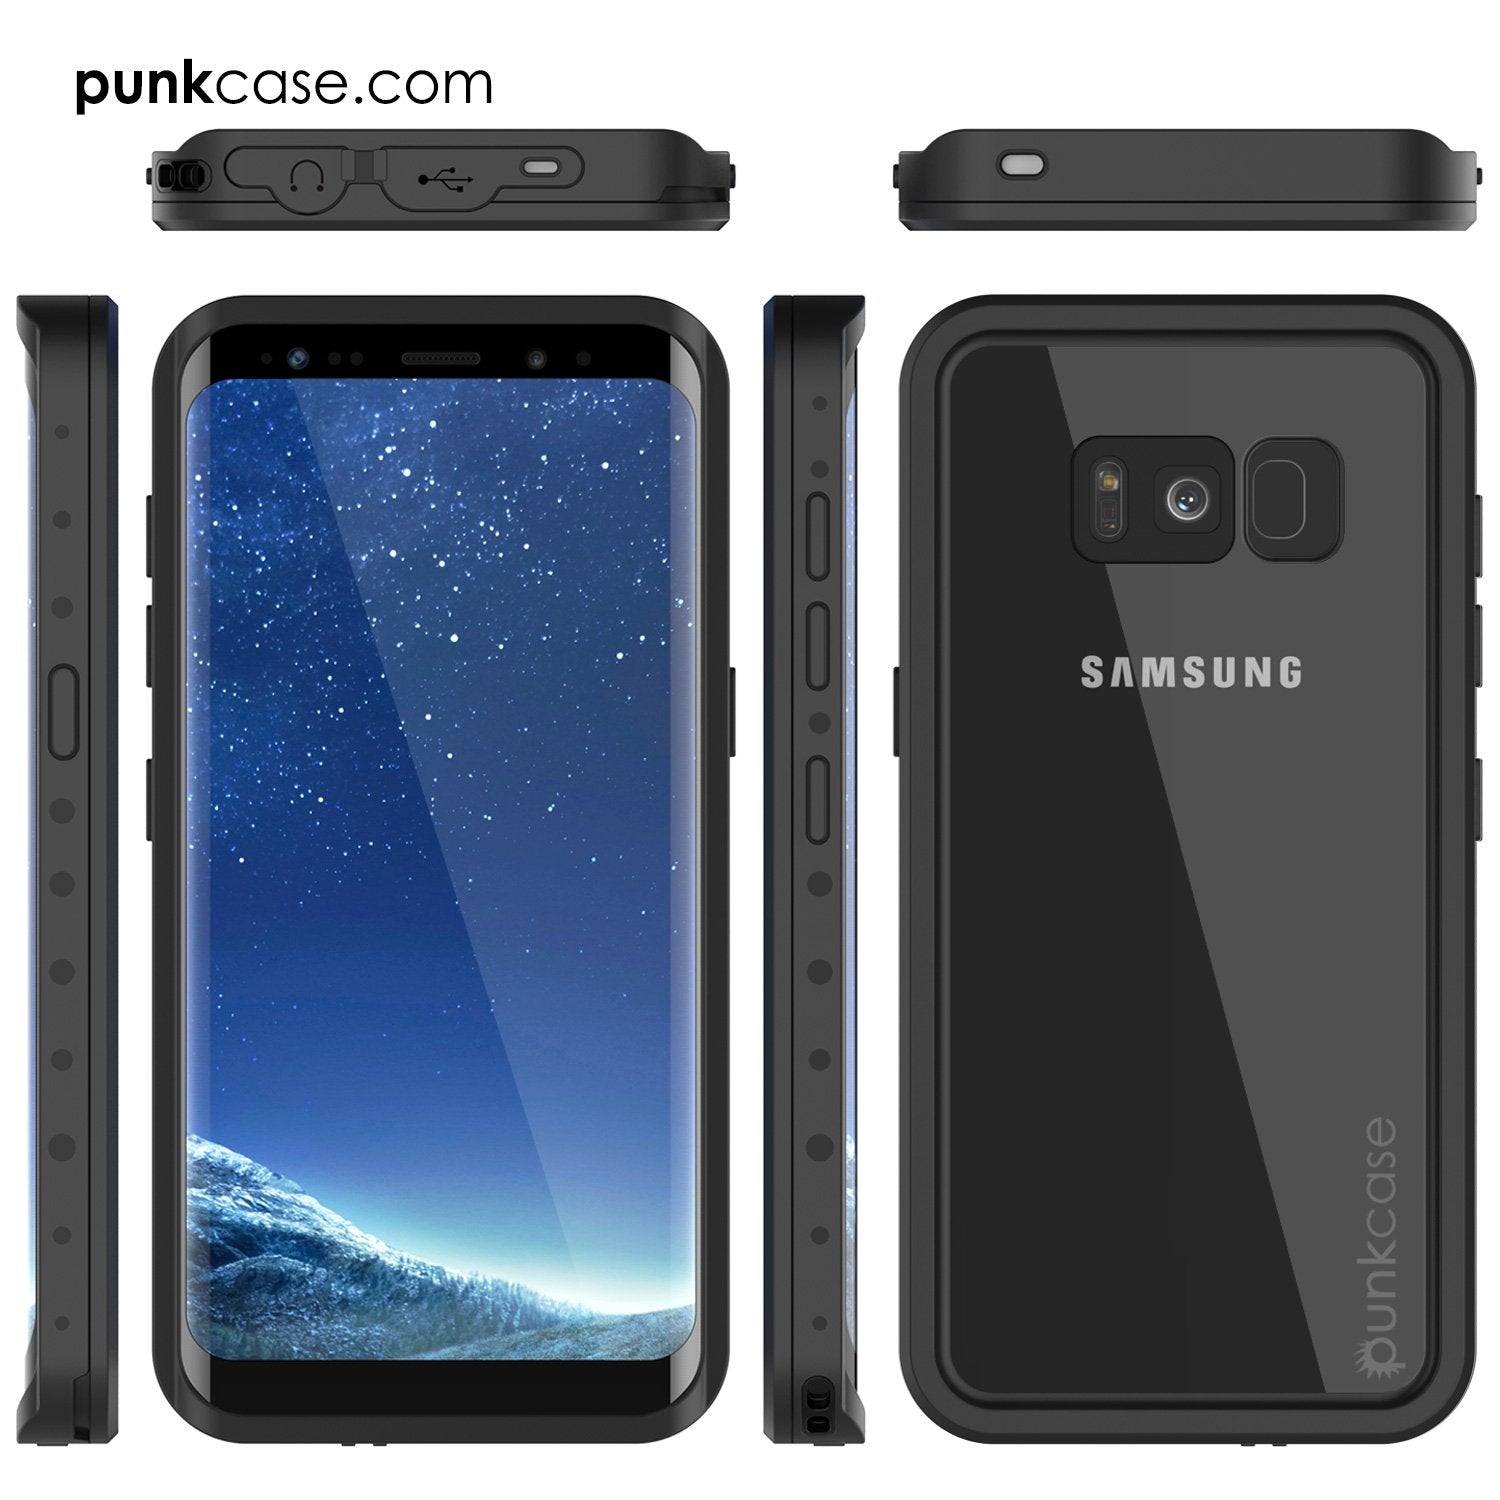 Galaxy S8 Plus Certified Water/Shock/Dirt/Snow Proof Slim Case [Clear]